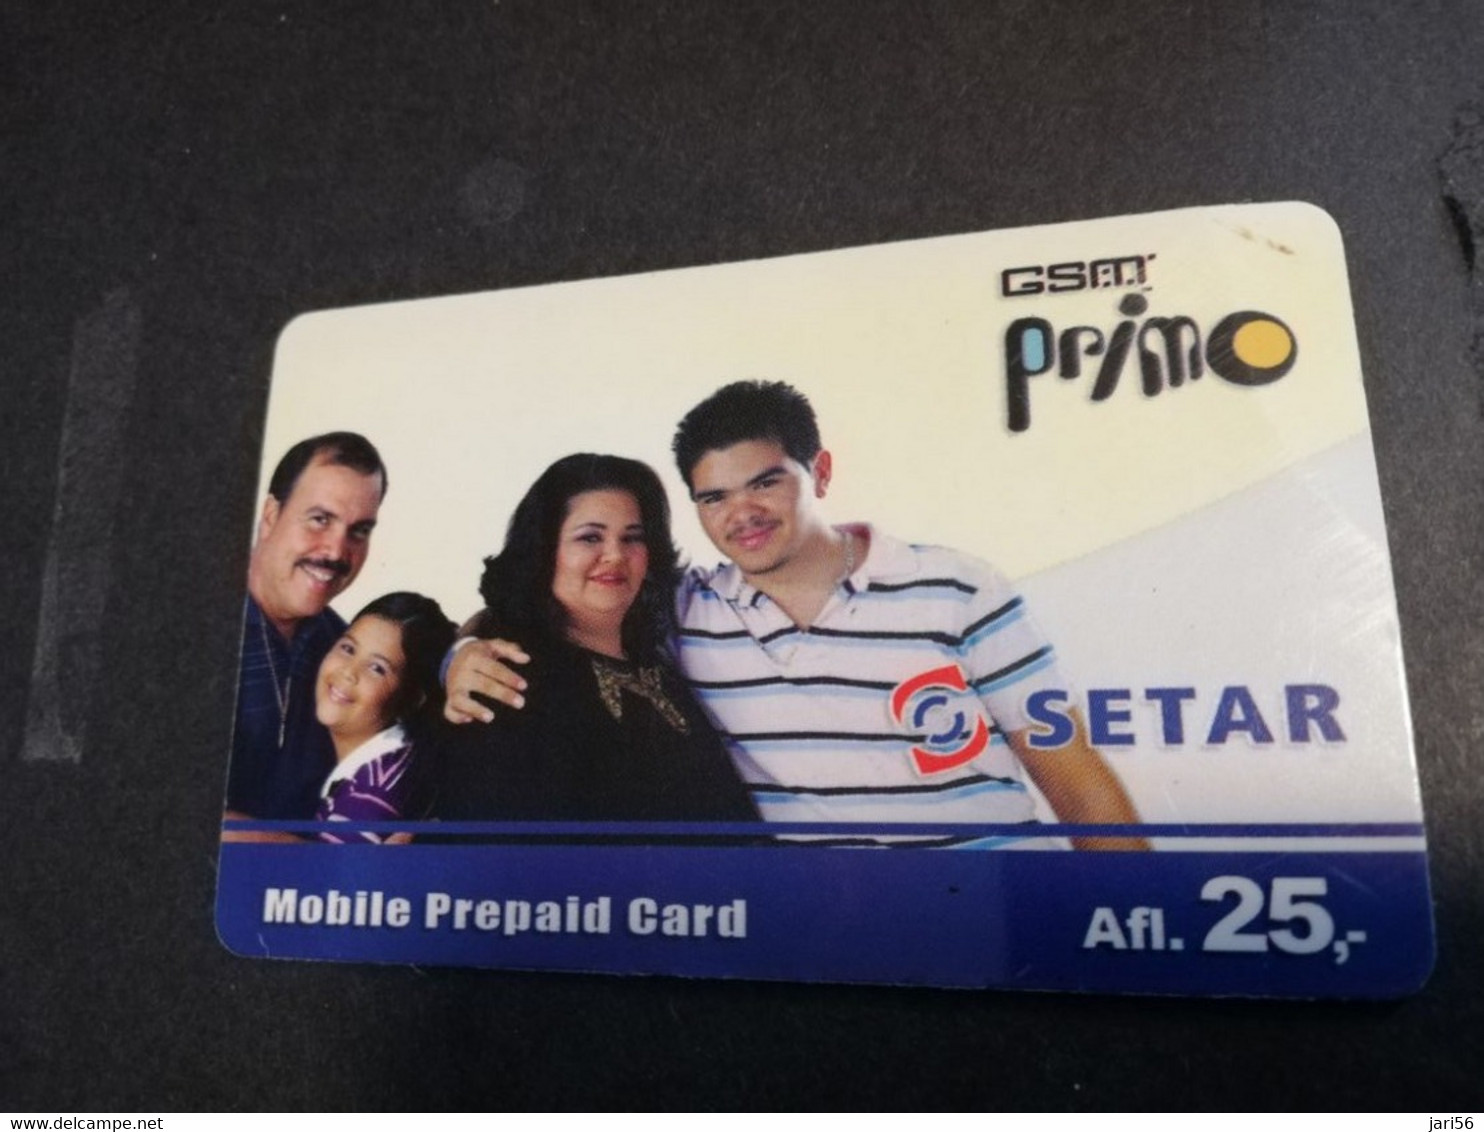 ARUBA PREPAID CARD  GSM PRIMO  SETAR  FAMILY        AFL 25,--    Fine Used Card  **4814** - Aruba